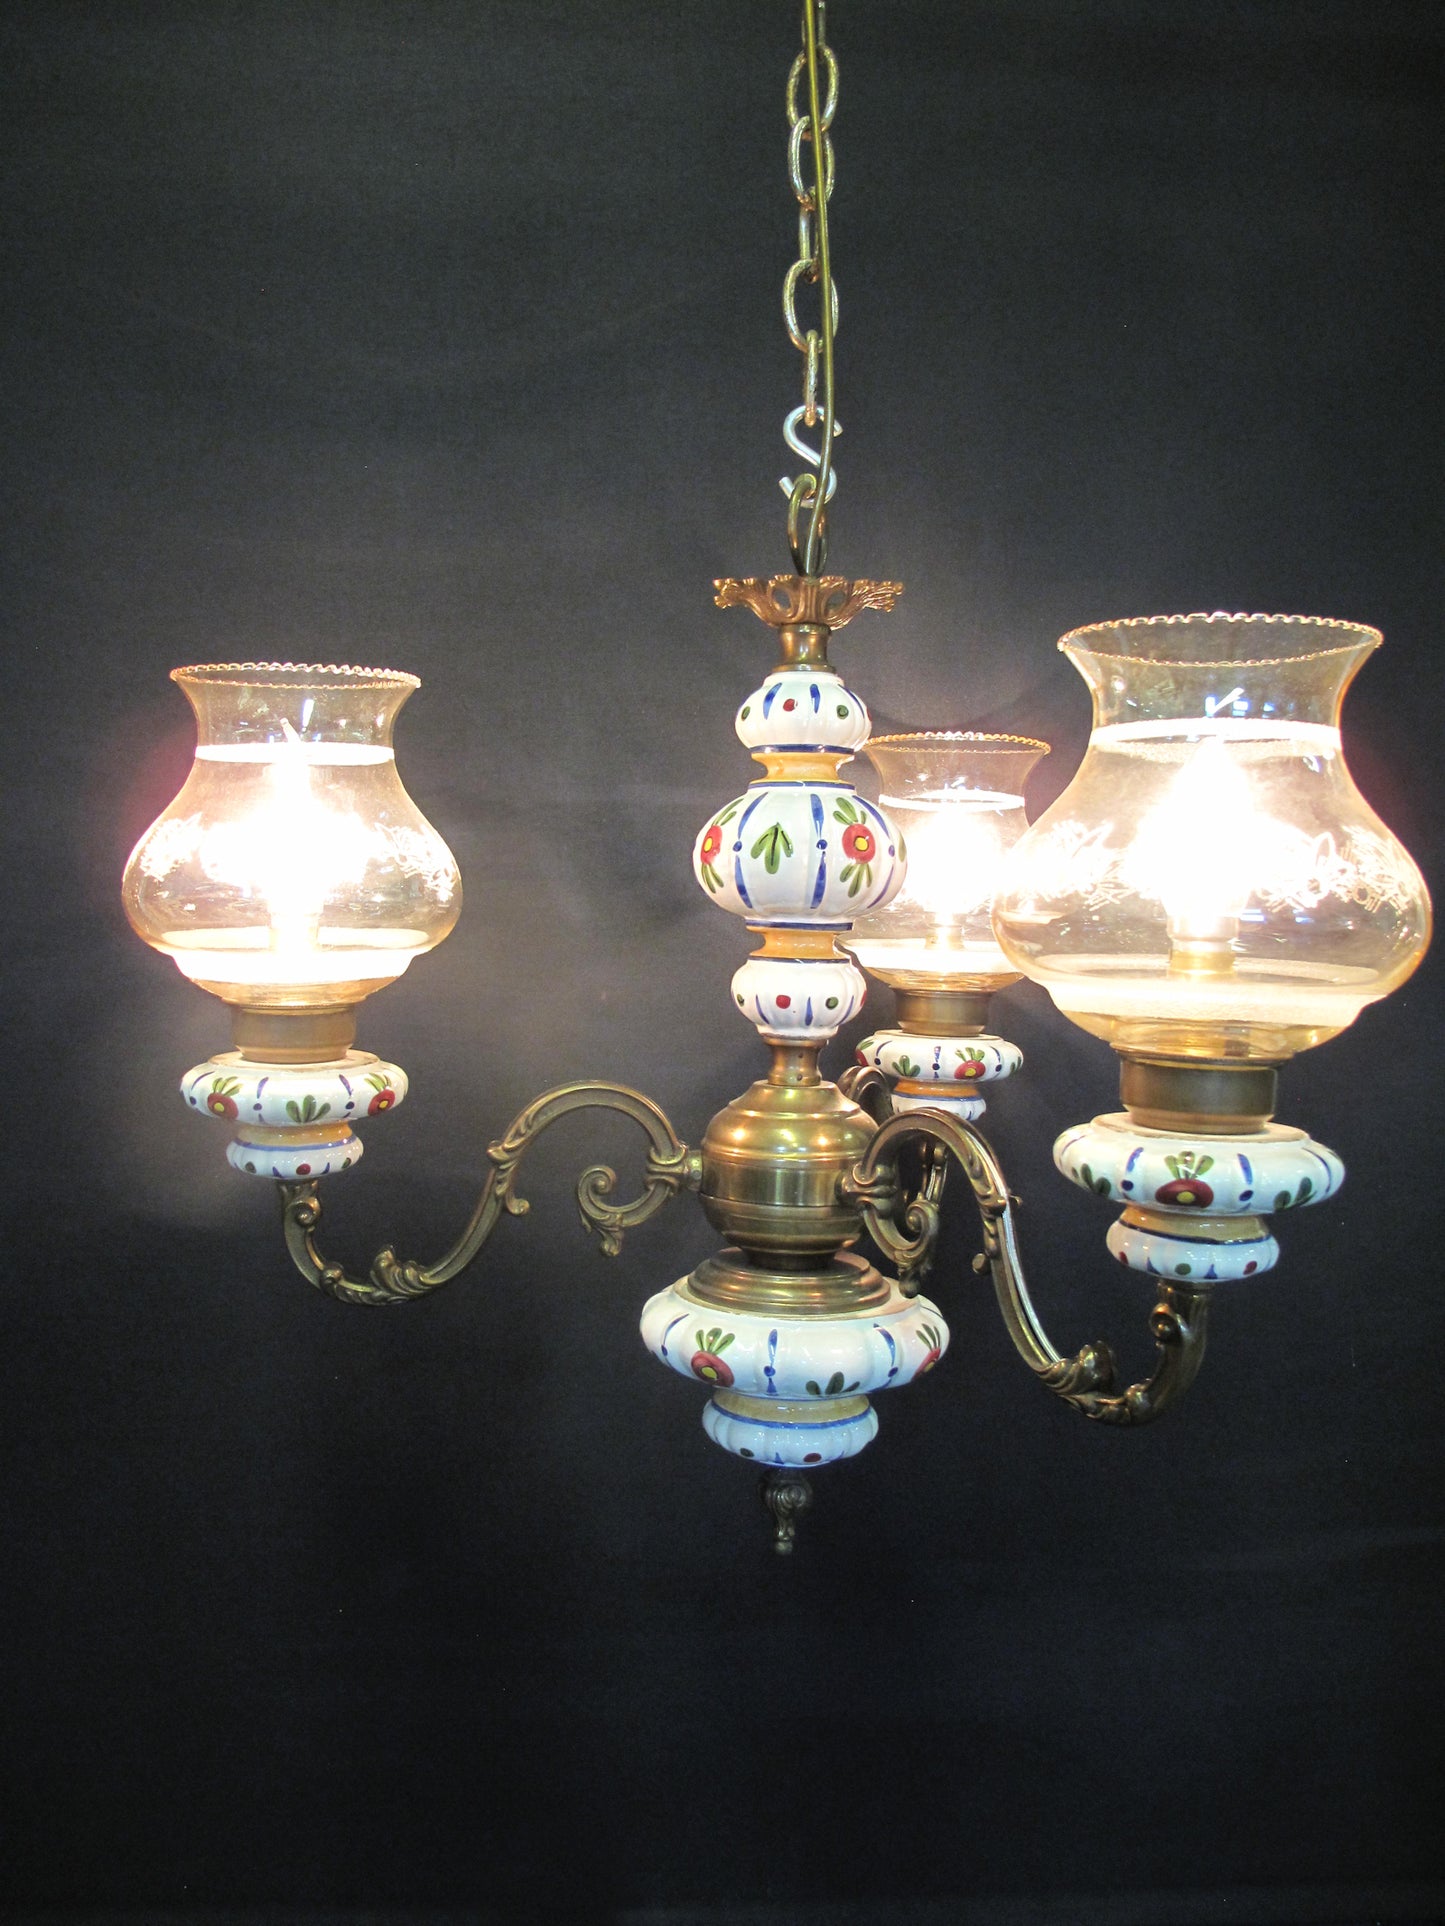 3 Arm brass & ceramic chandelier, lit up